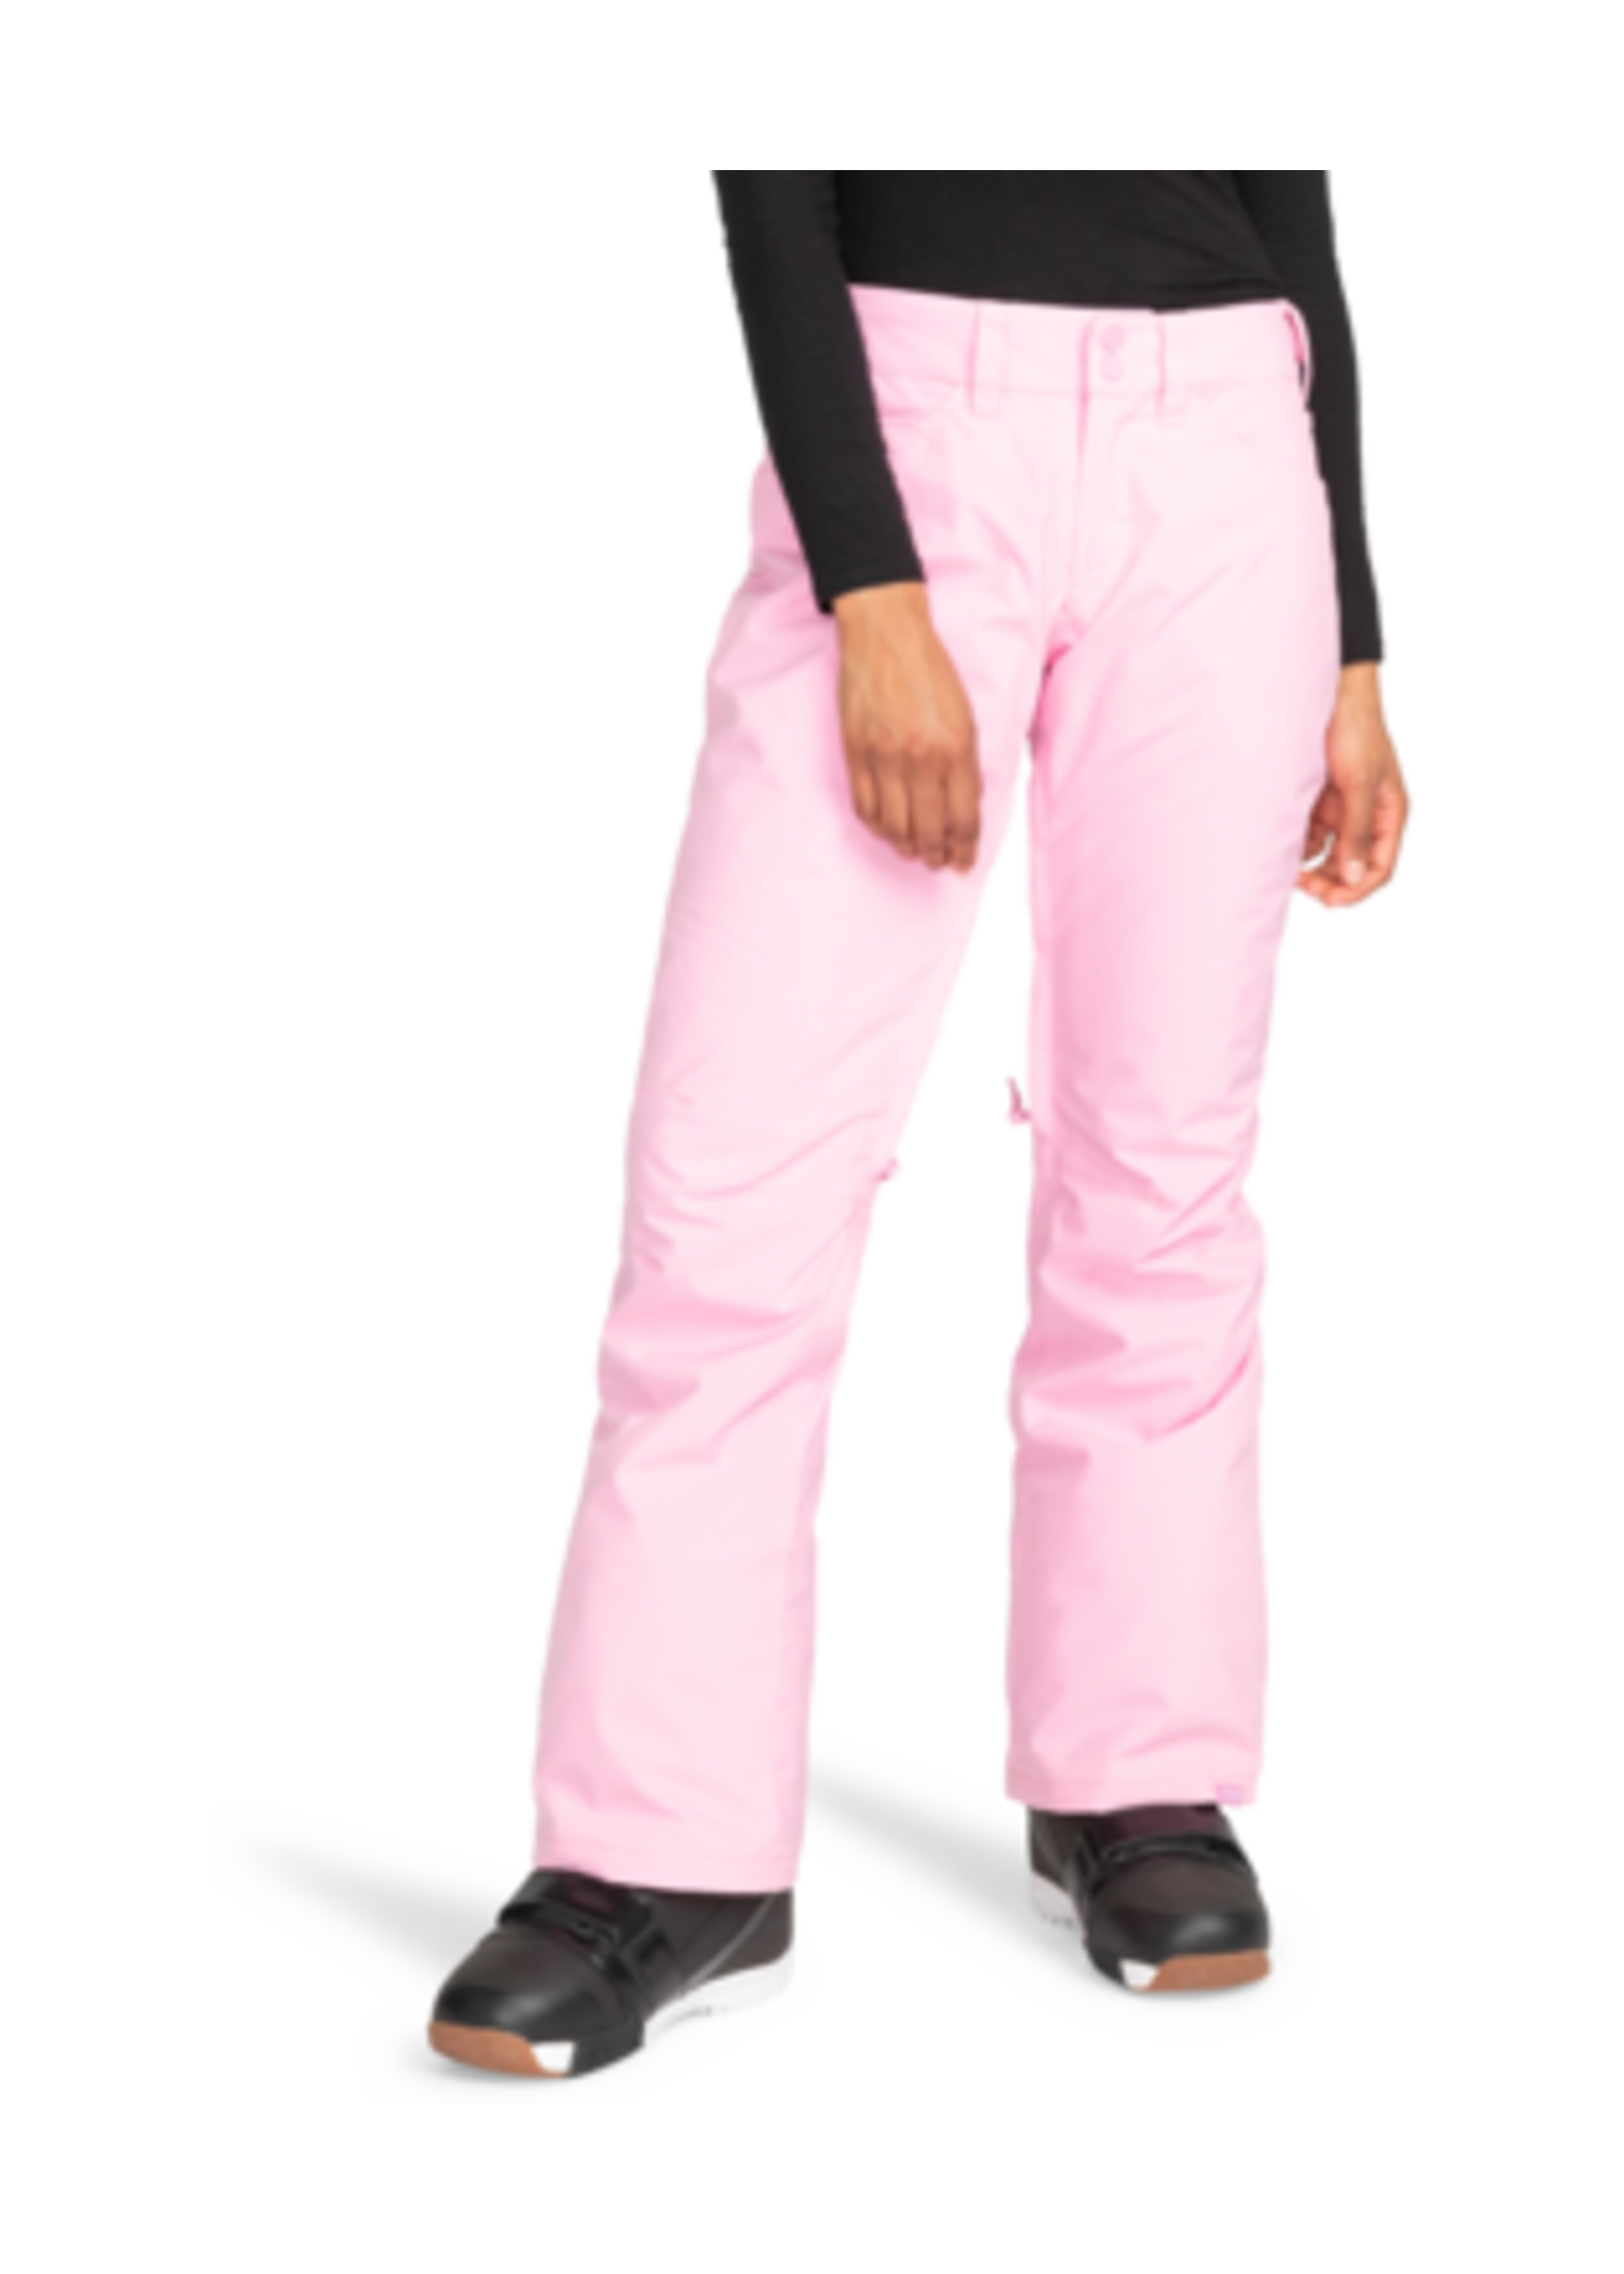 Roxy Girls Backyard Snow Pants - Shocking Pink